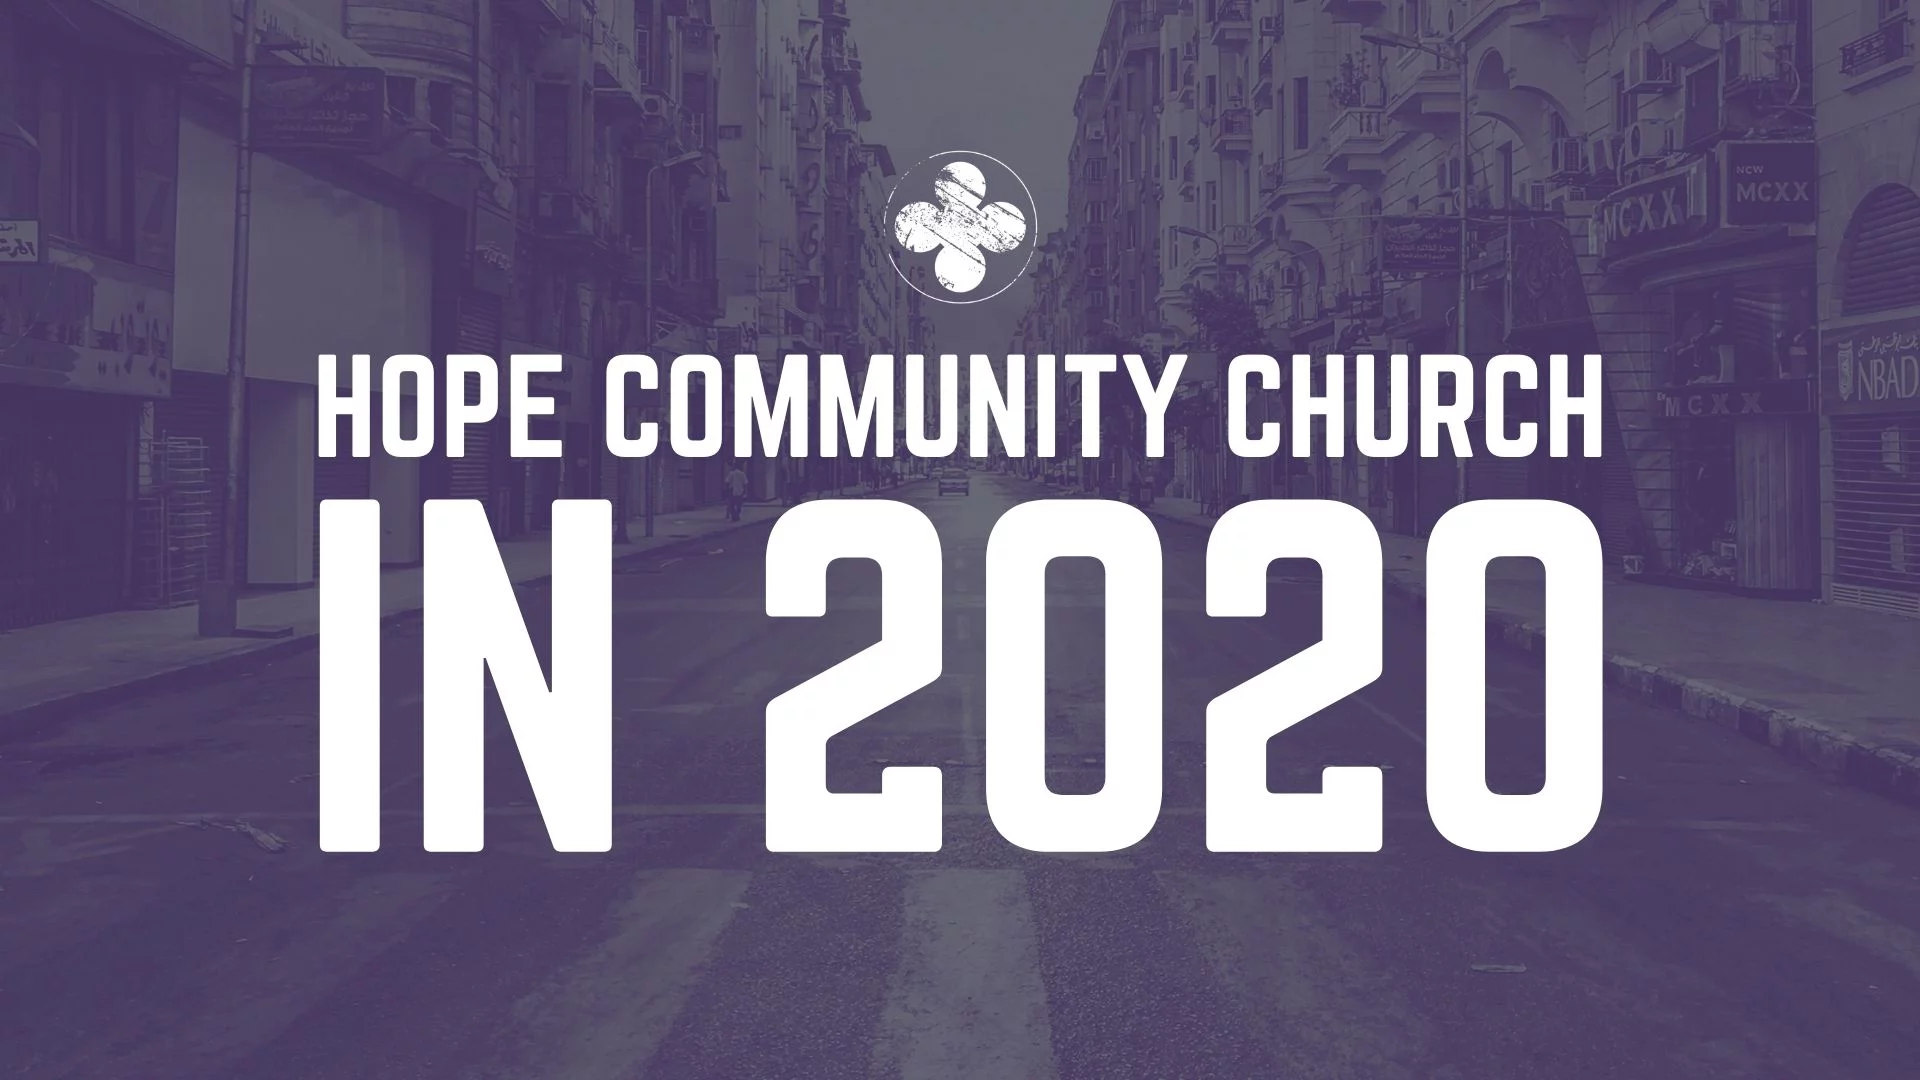 Hope Community Church in 2020 series